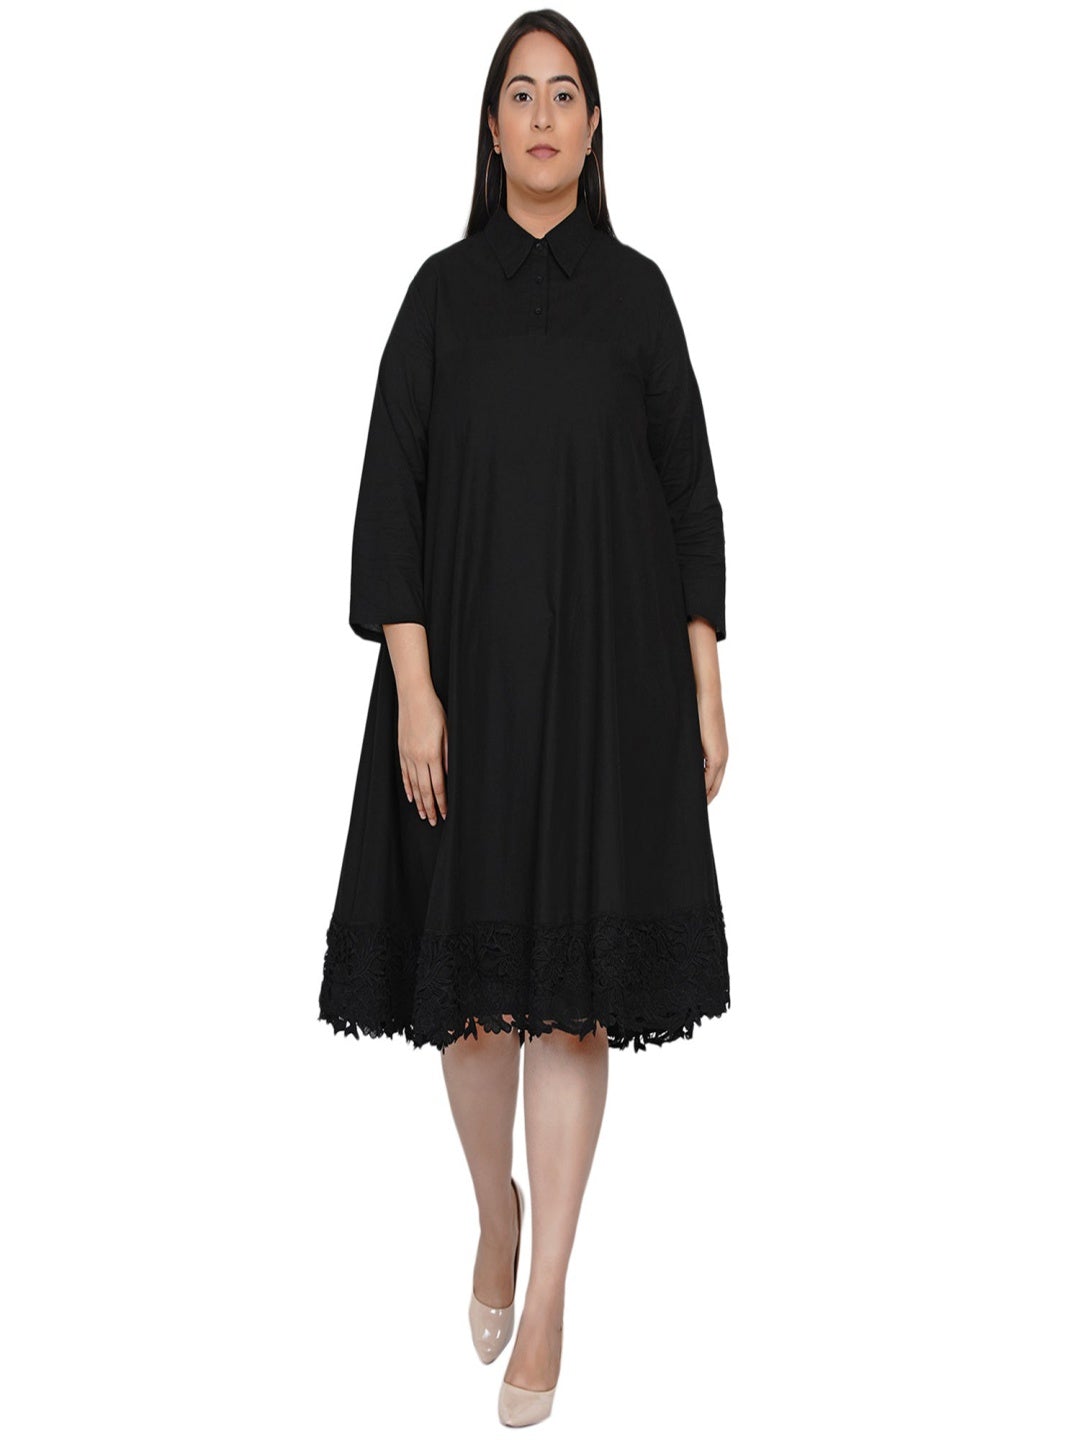 Black Cotton Flowy Dress With Black Lace